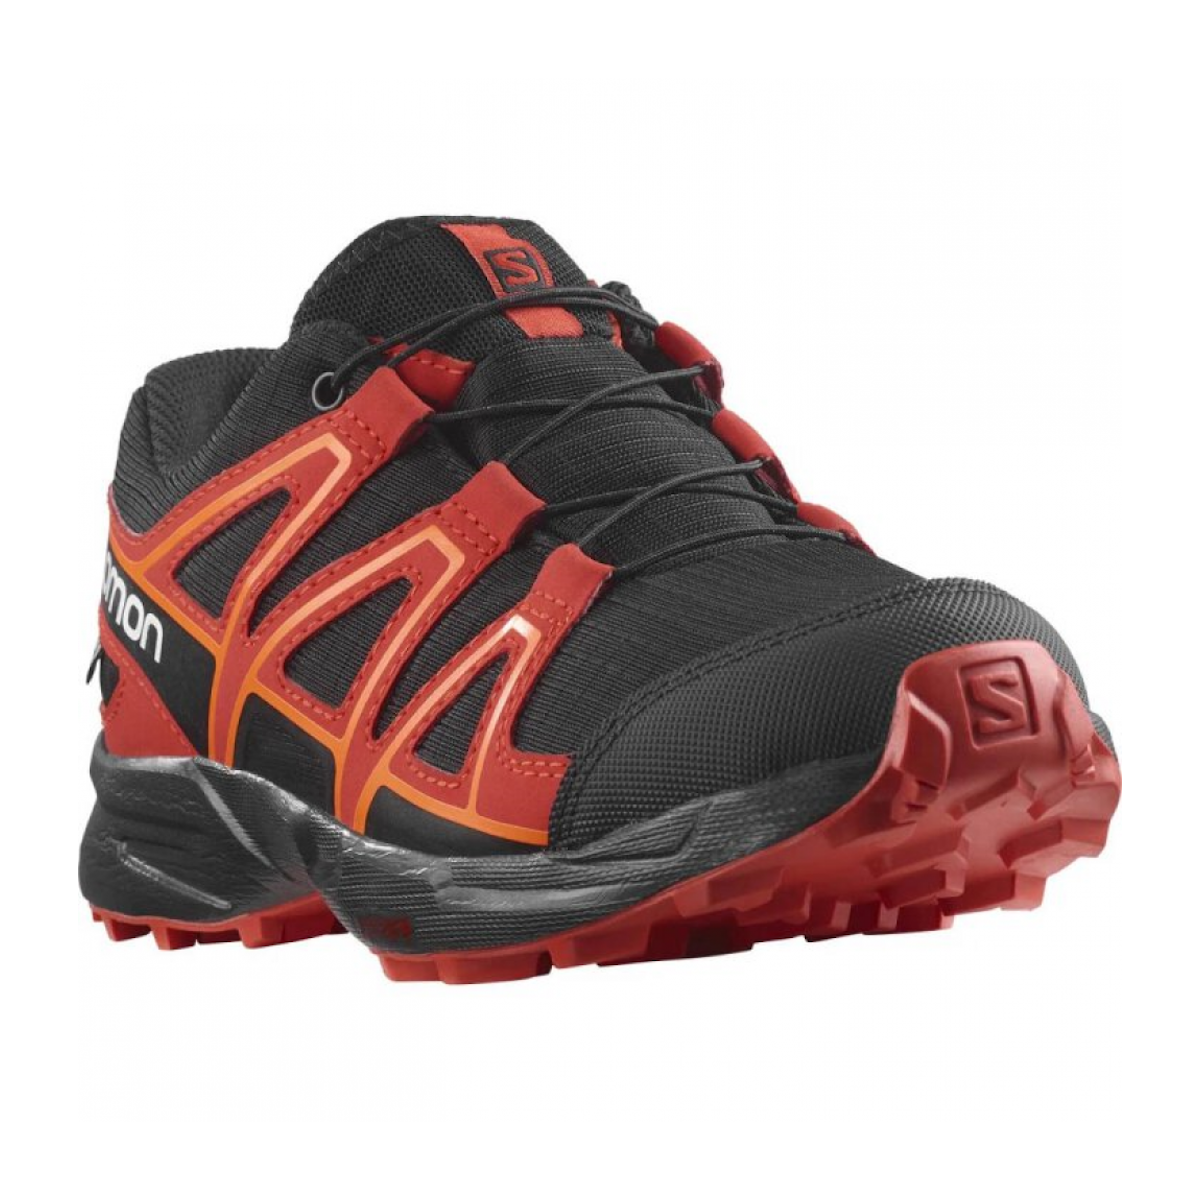 SALOMON SPEEDCROSS CSWP J trail running shoes - black/red/orange